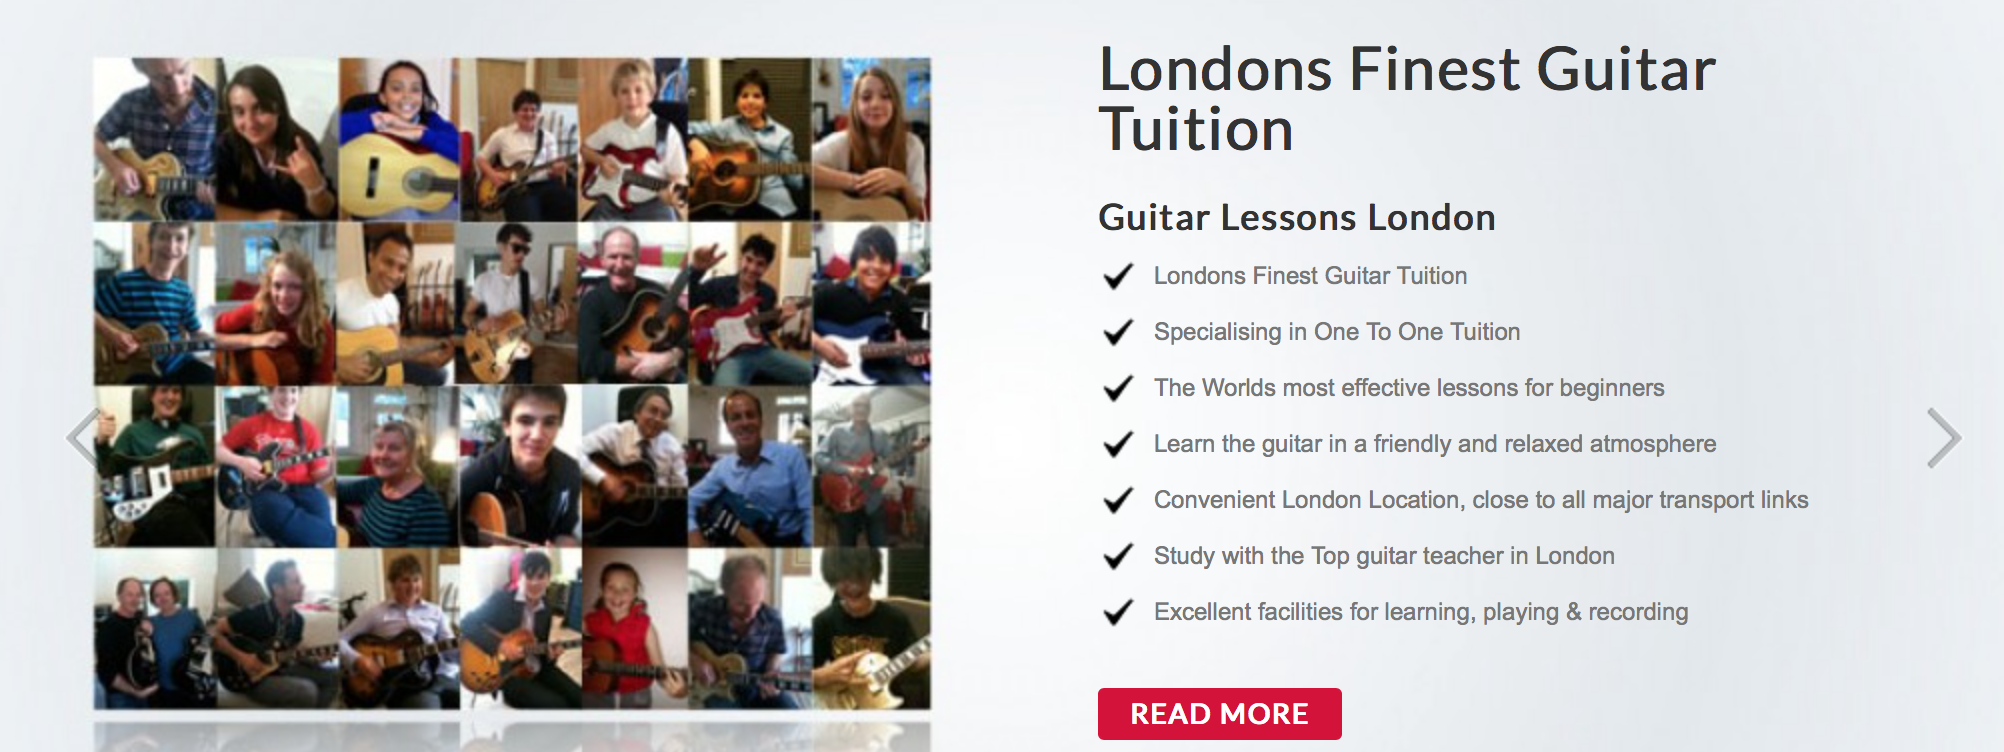 Guitar Lessons Camden Guitar Lessons Islington Guitar Lessons Chelsea Guitar Lessons Fulham